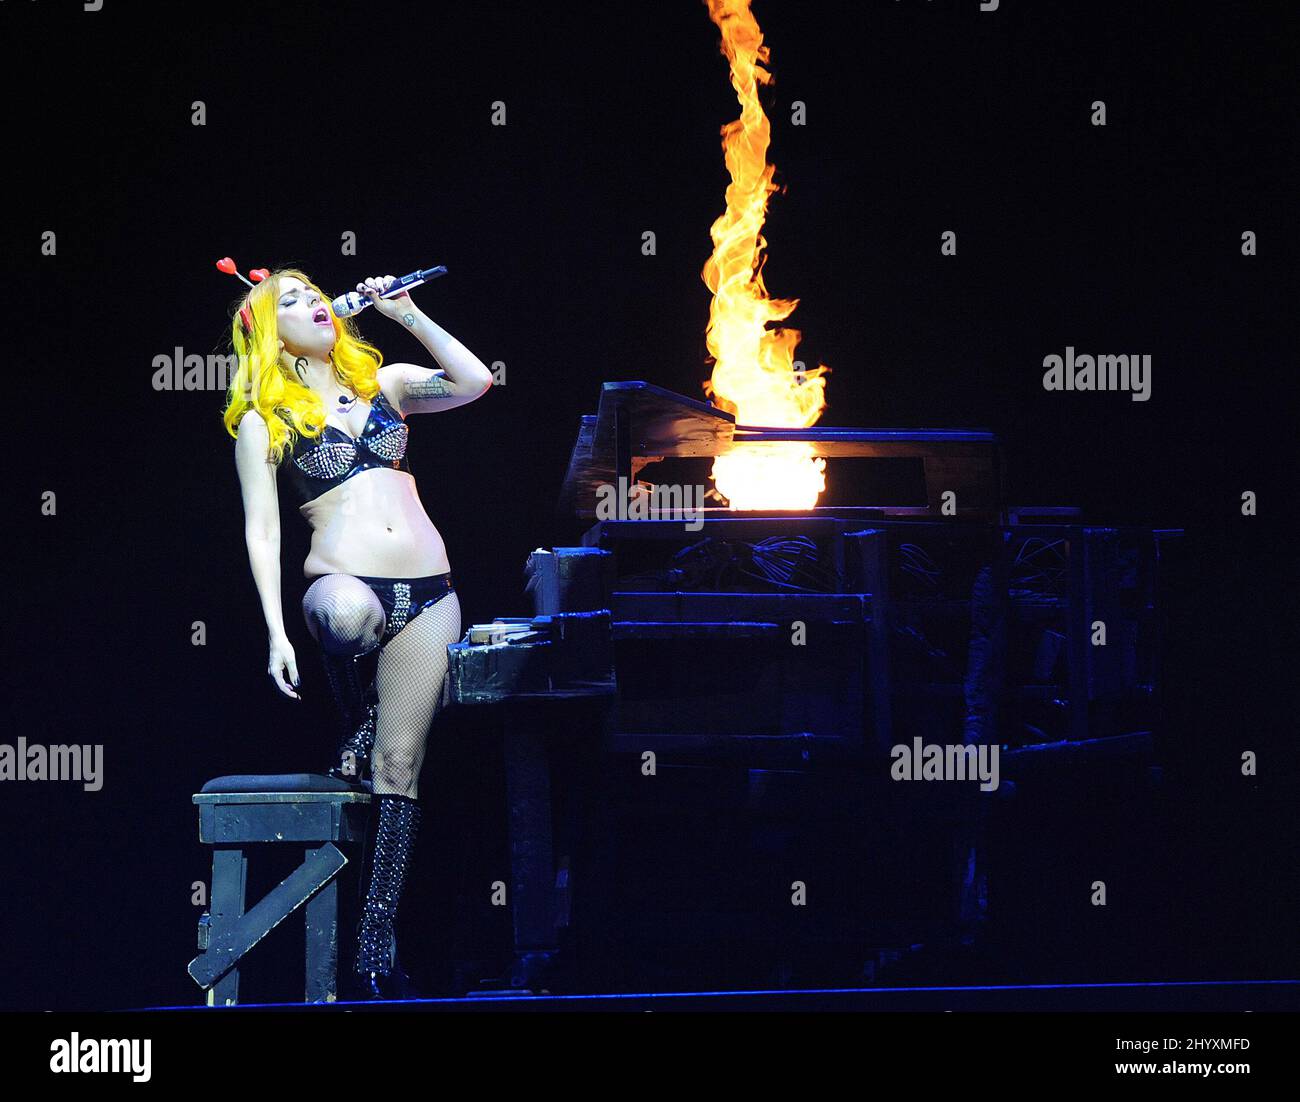 Lady Gaga im Konzert im Rahmen der „Monster Ball“ Tour im RB Center, Raleigh, North Carolina. Stockfoto